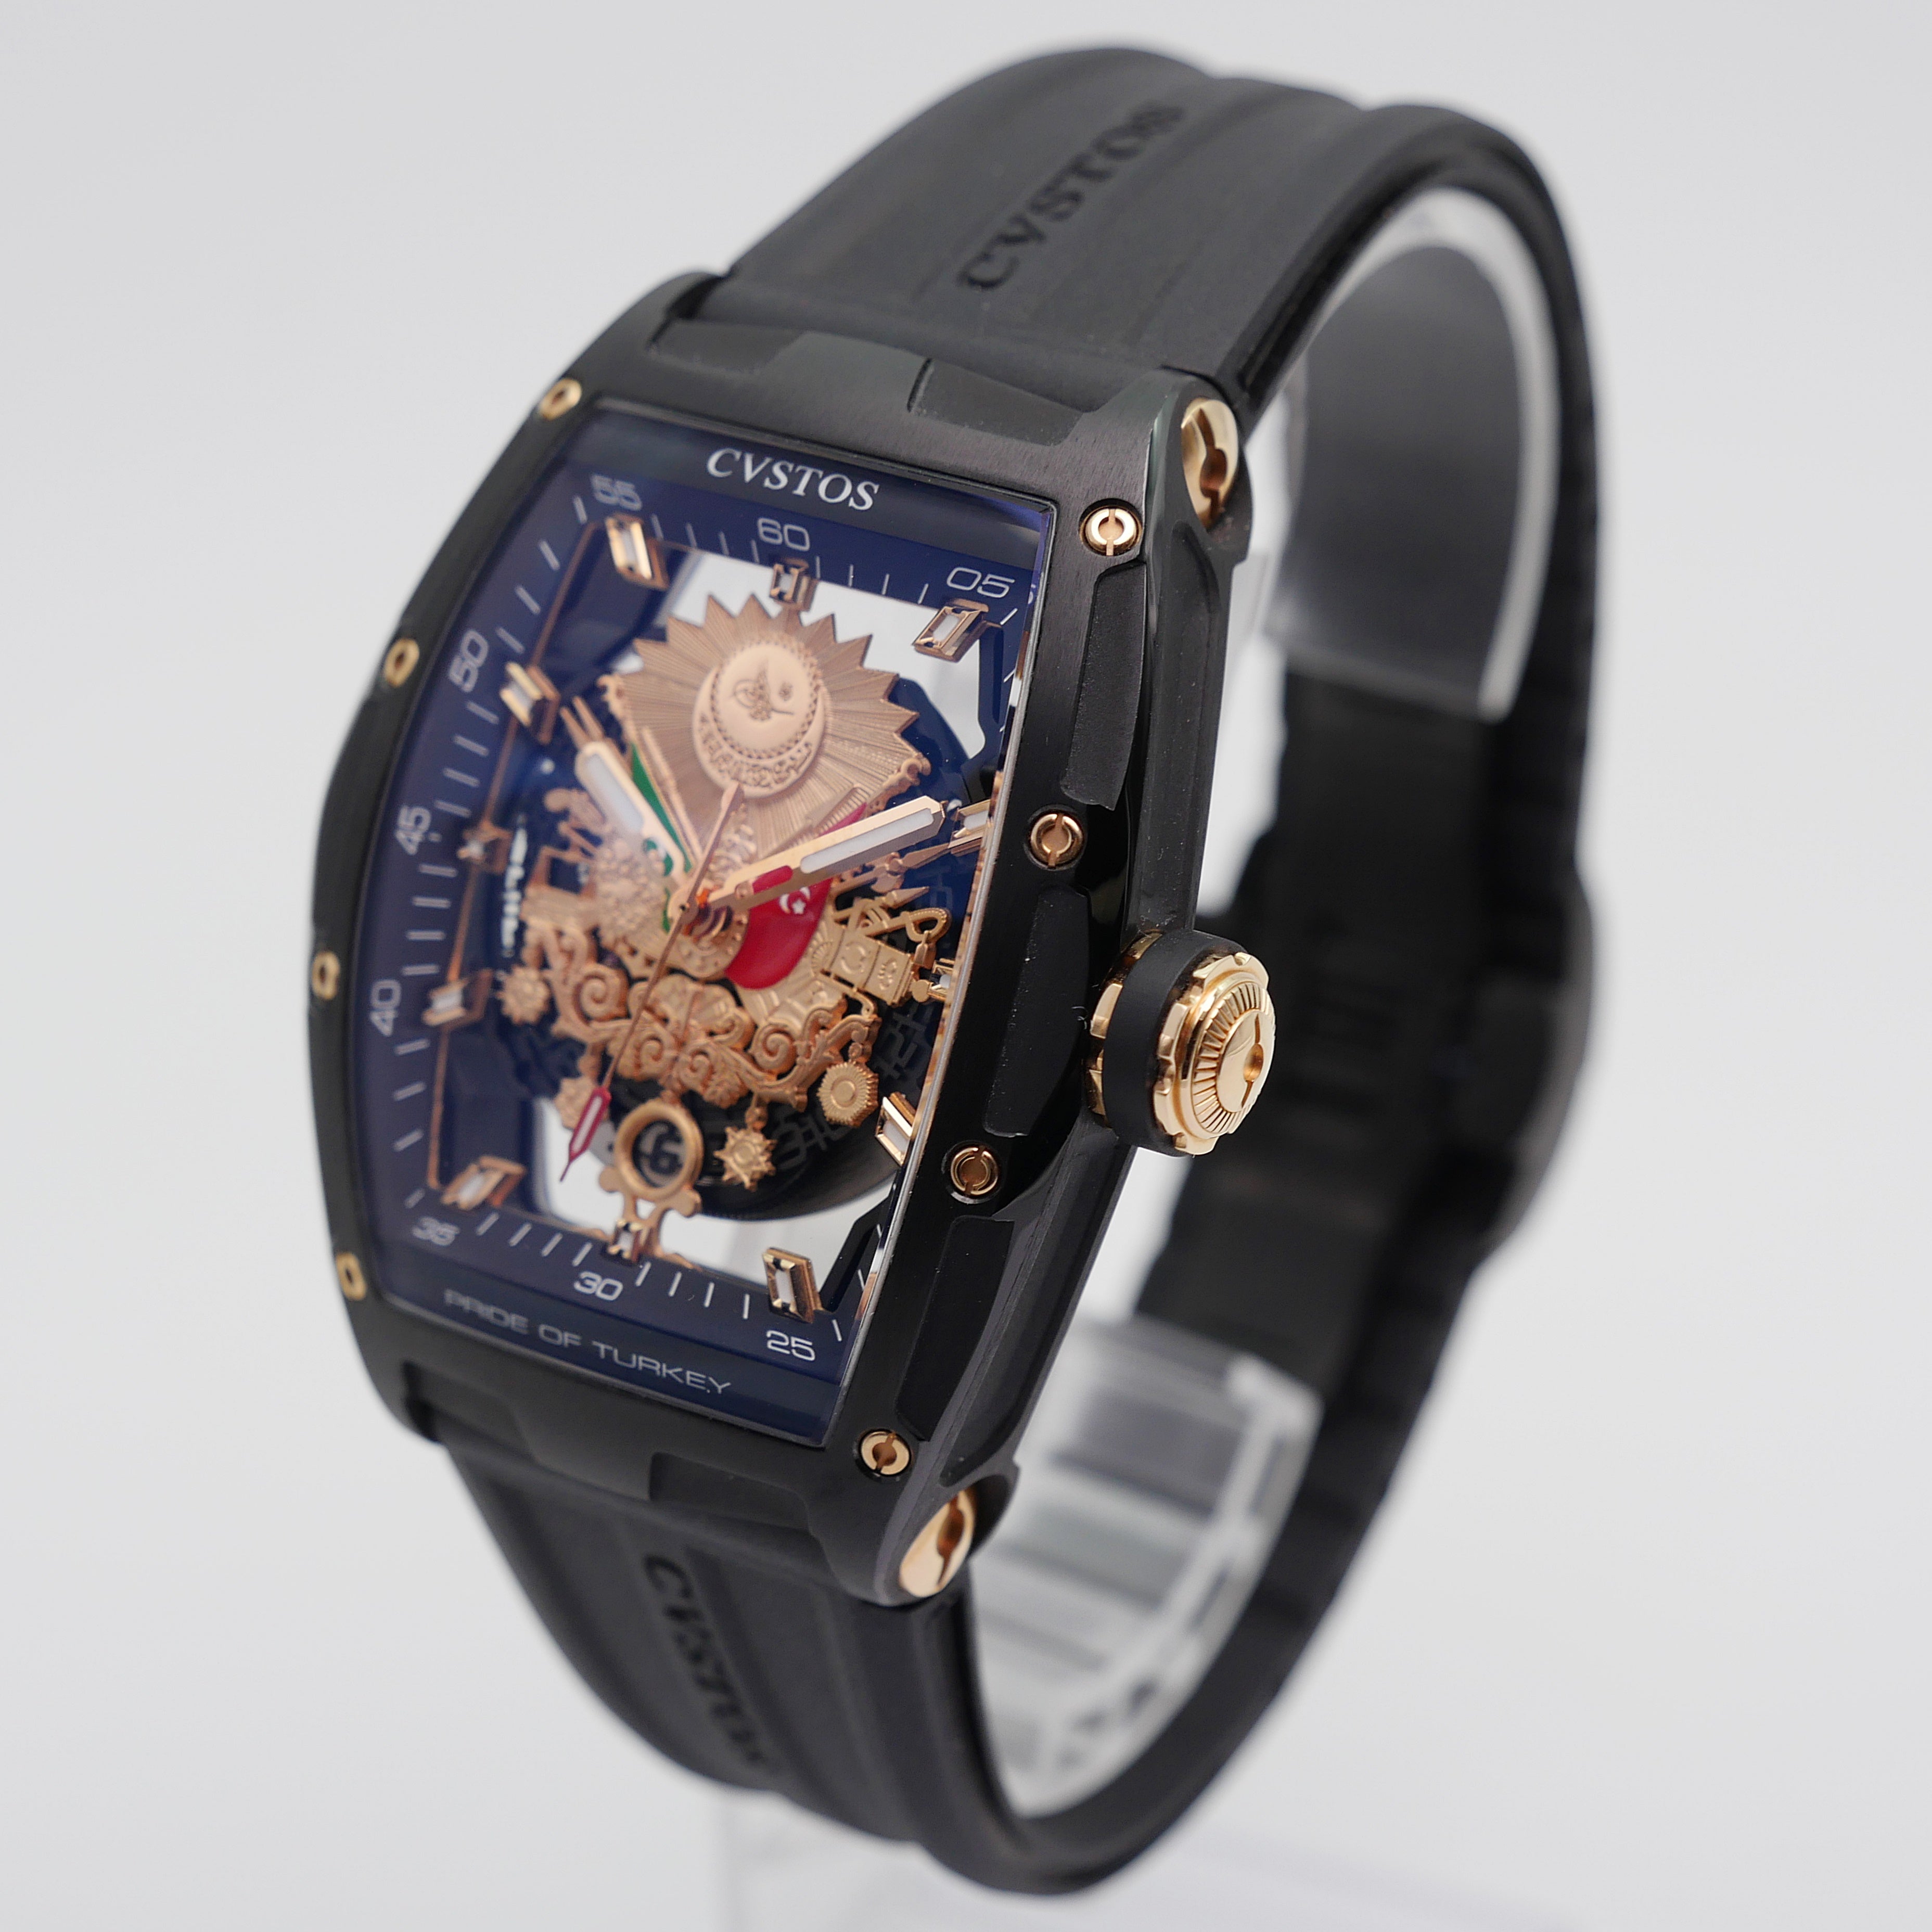 Cvstos Jetliner II Skull Inkvaders Wristwatch A10101.4106001 Titanium Steel  | eBay